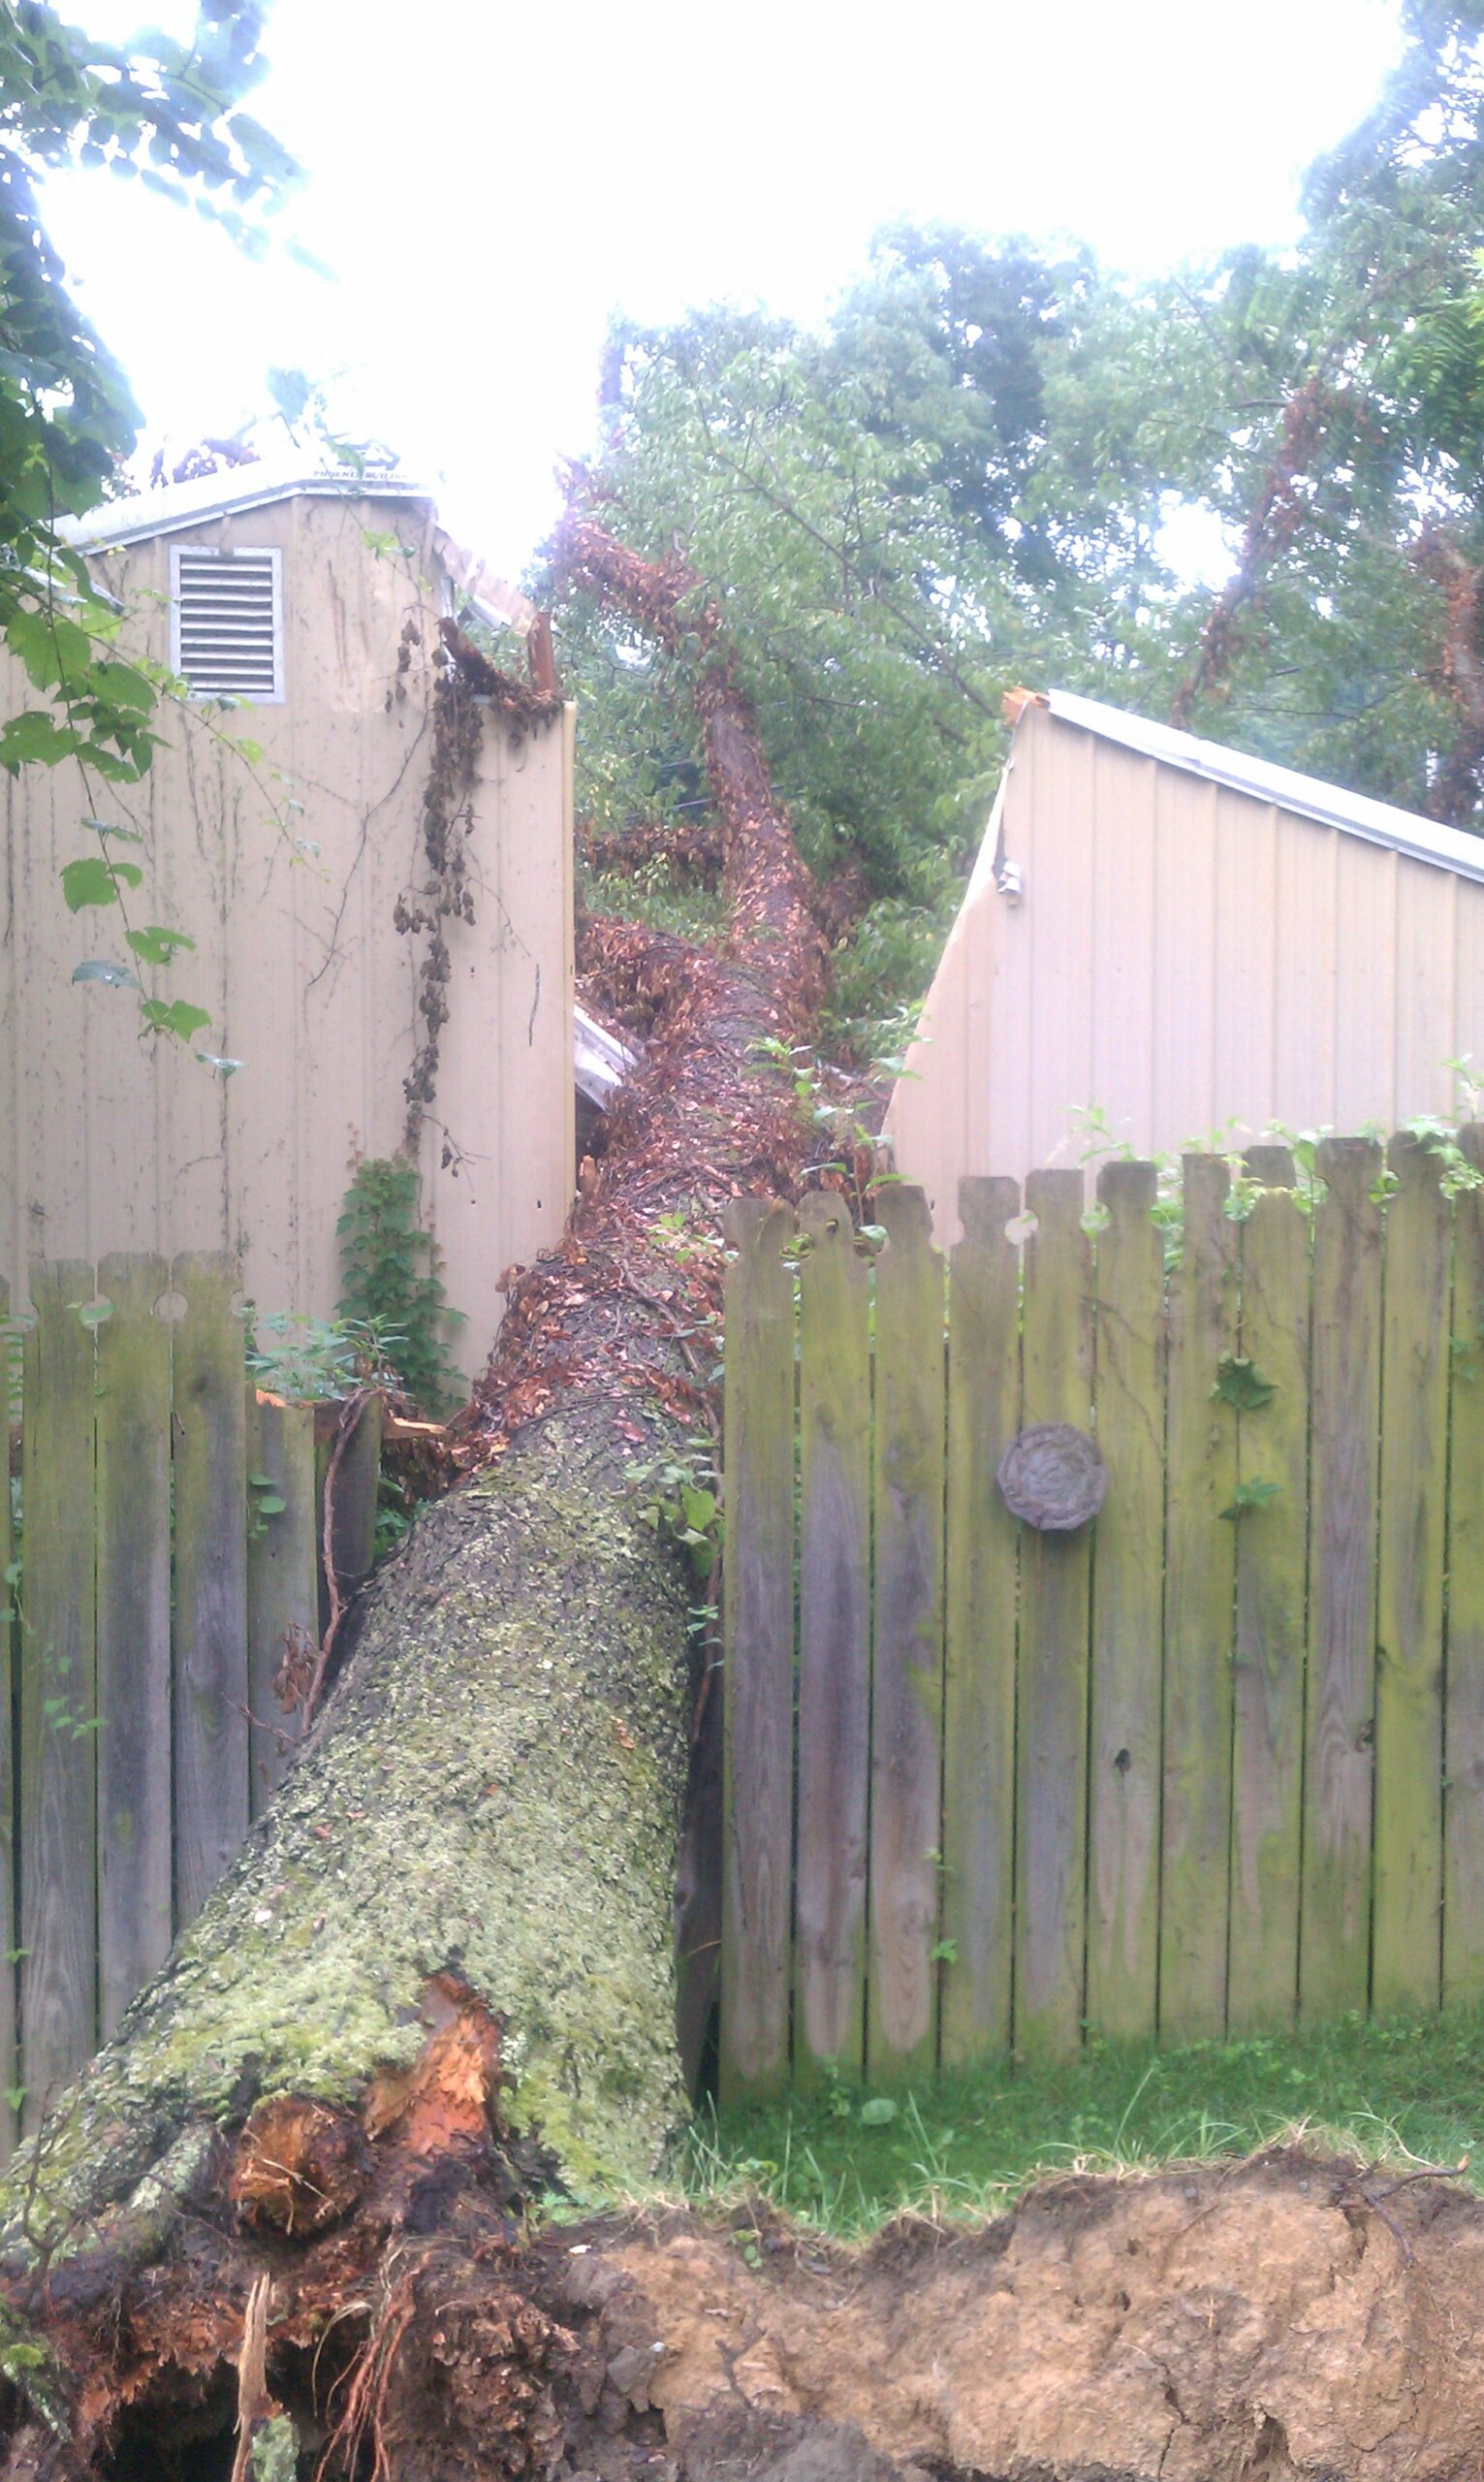 Tree down storm damage